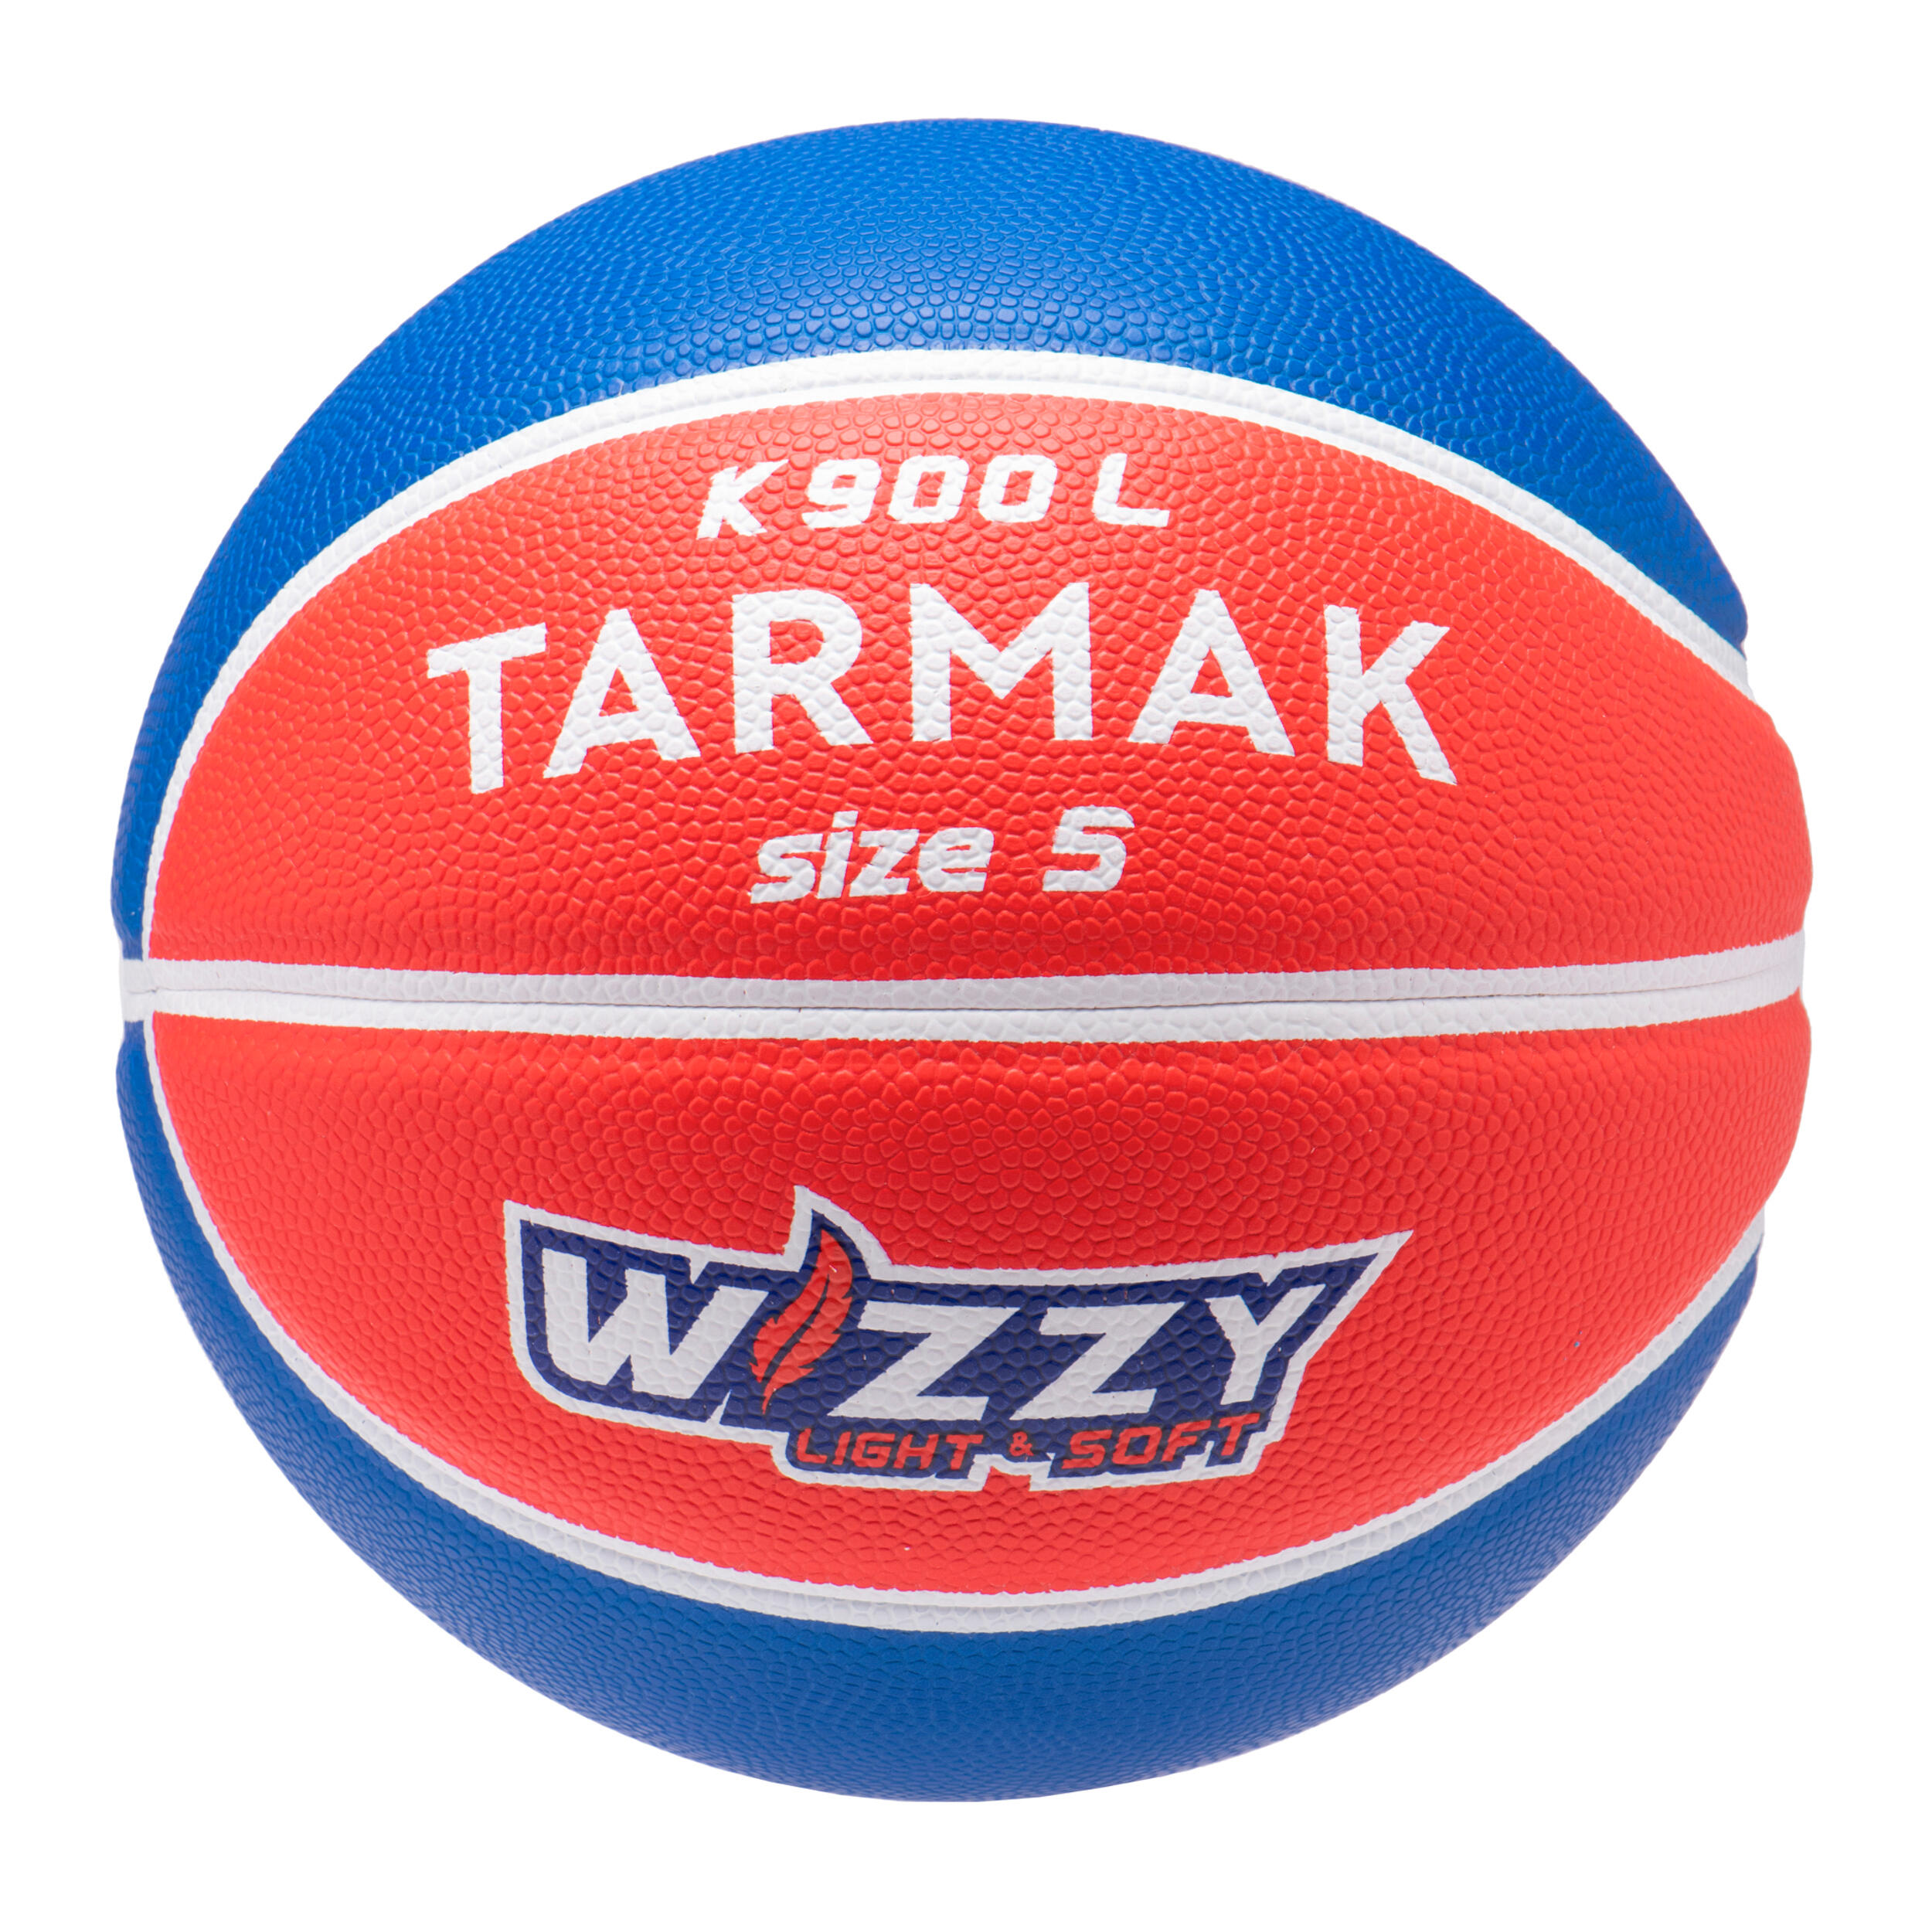 TARMAK K900 Wizzy Ball - Blue/Red